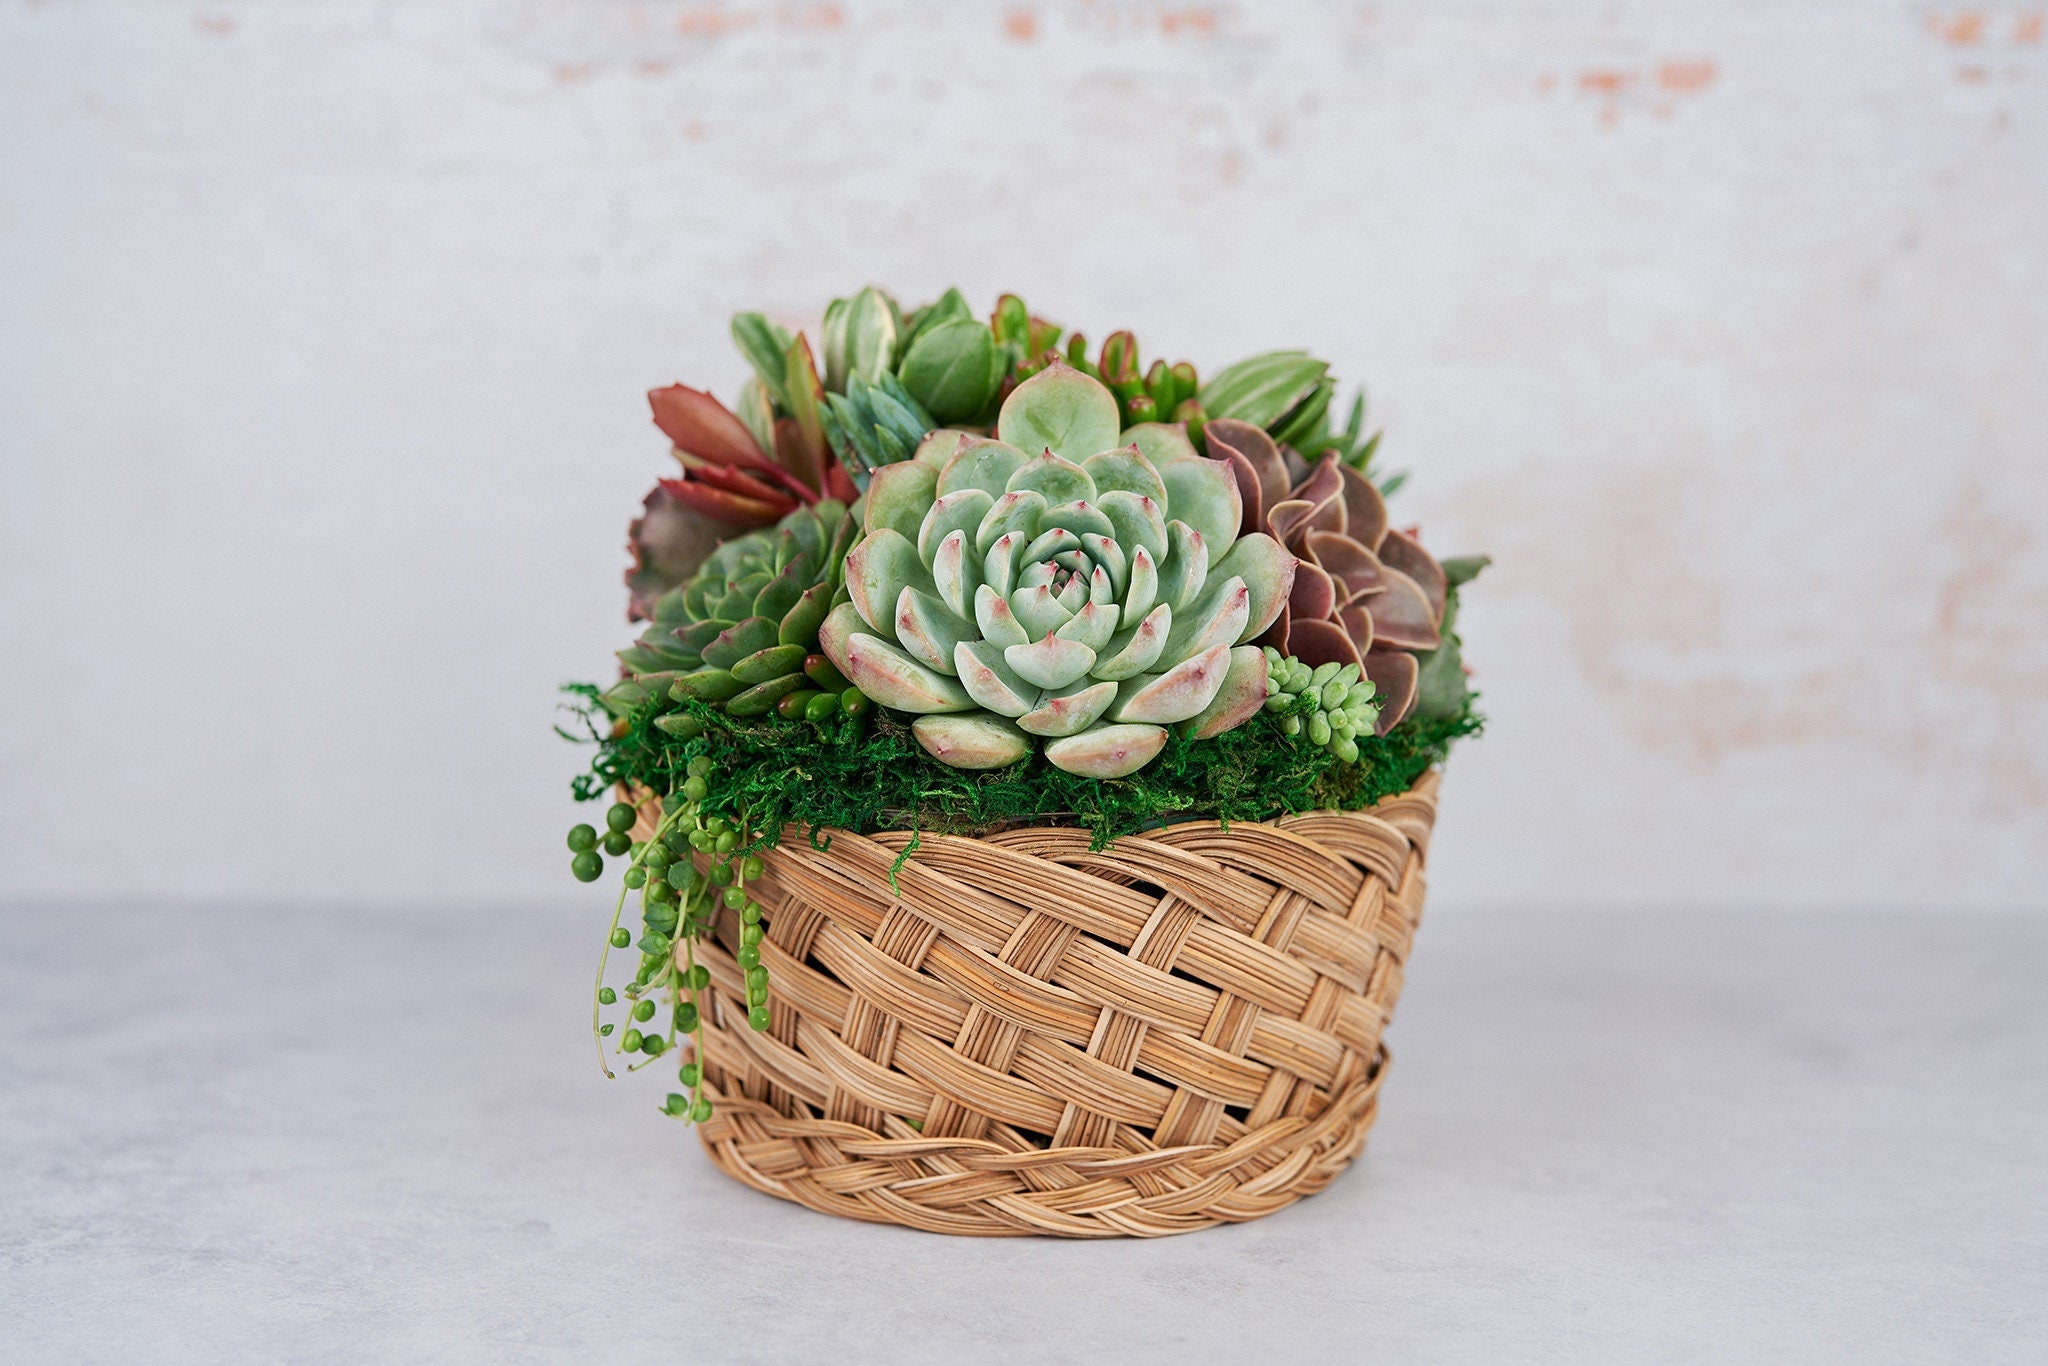 Boho Basket Succulent Arrangement Planter: Living Succulent Gift, Centerpiece for Weddings & Events, Housewarming Gift